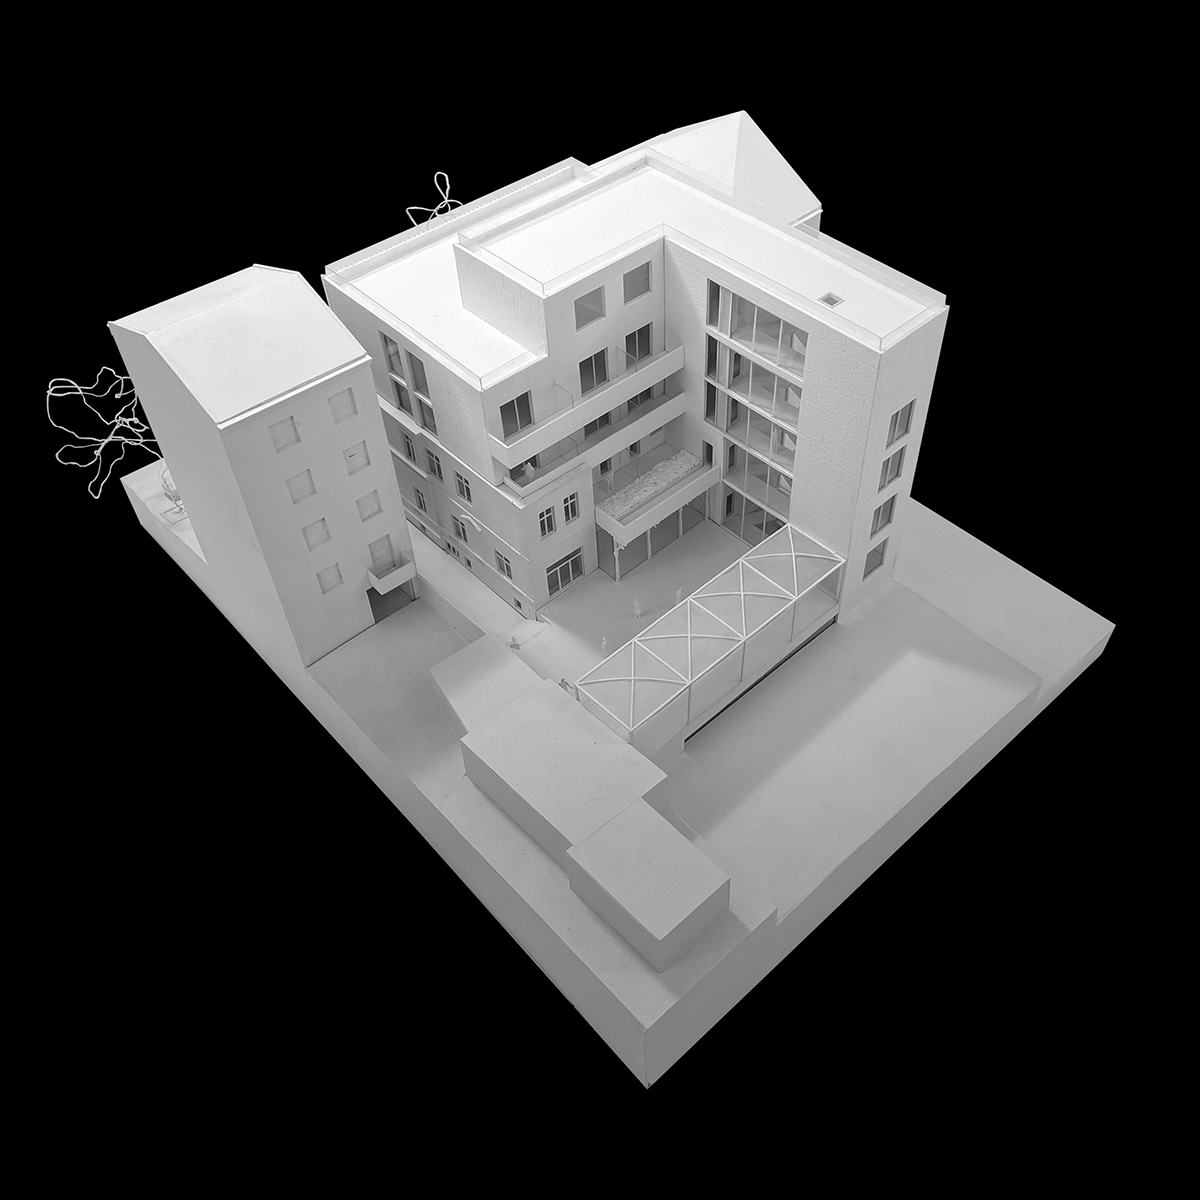 architecture model, architecture, apartment building